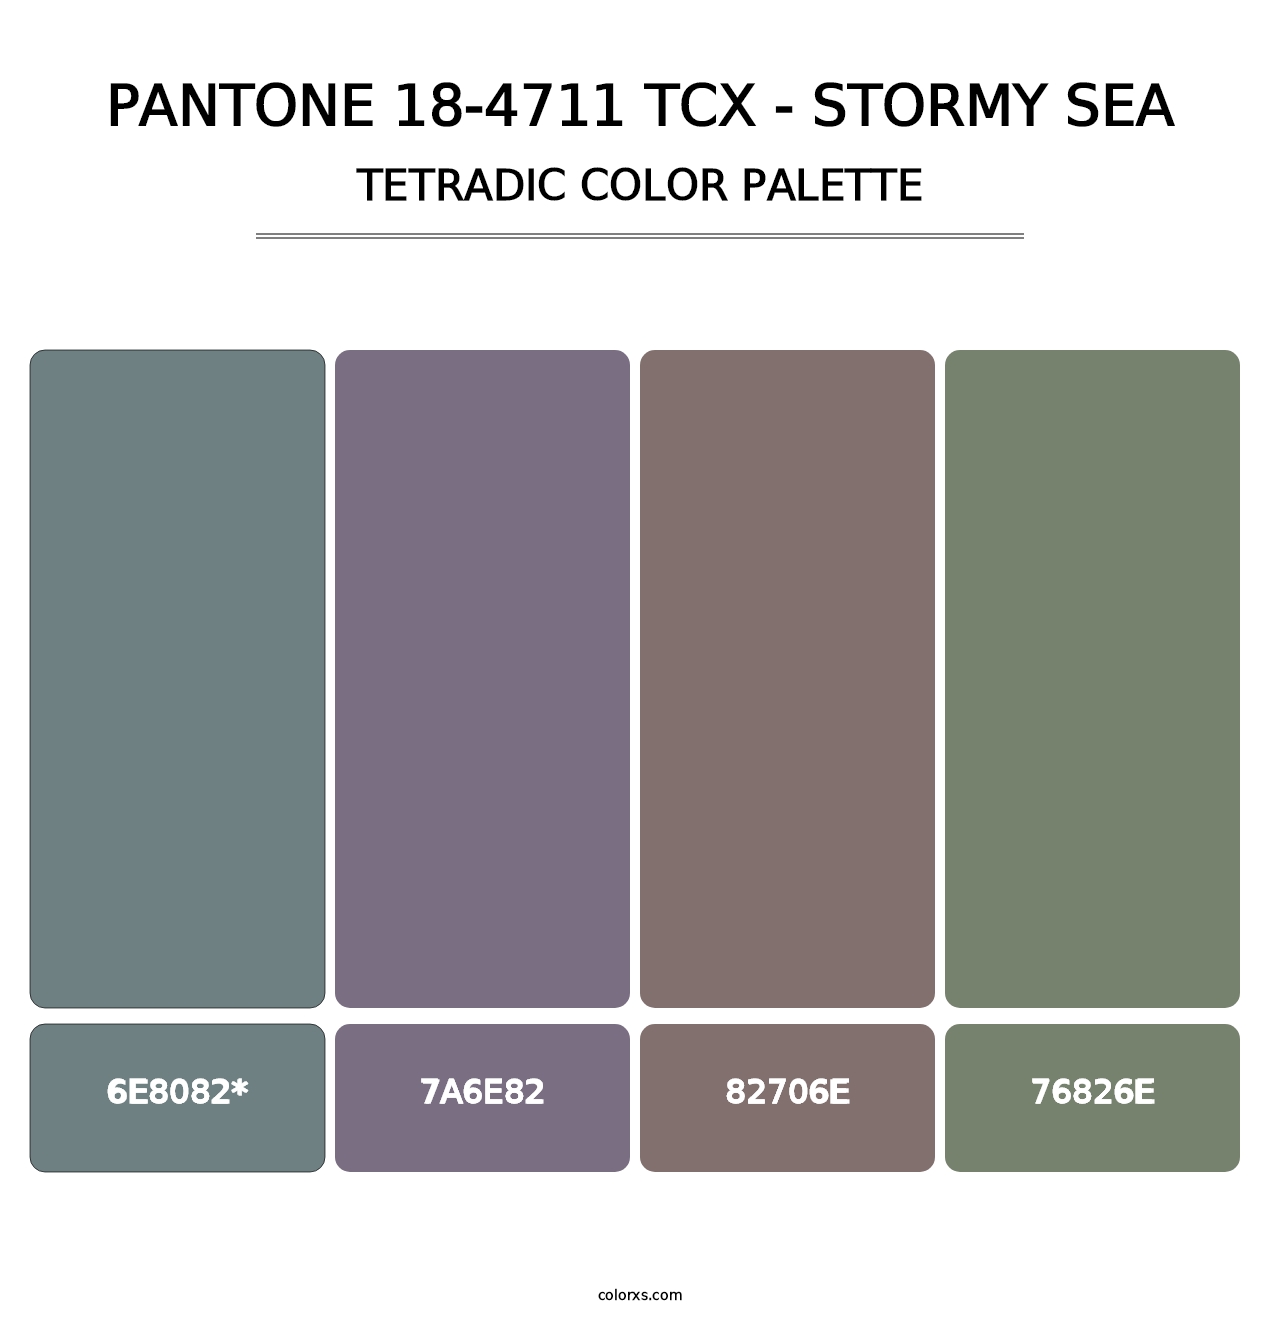 PANTONE 18-4711 TCX - Stormy Sea - Tetradic Color Palette